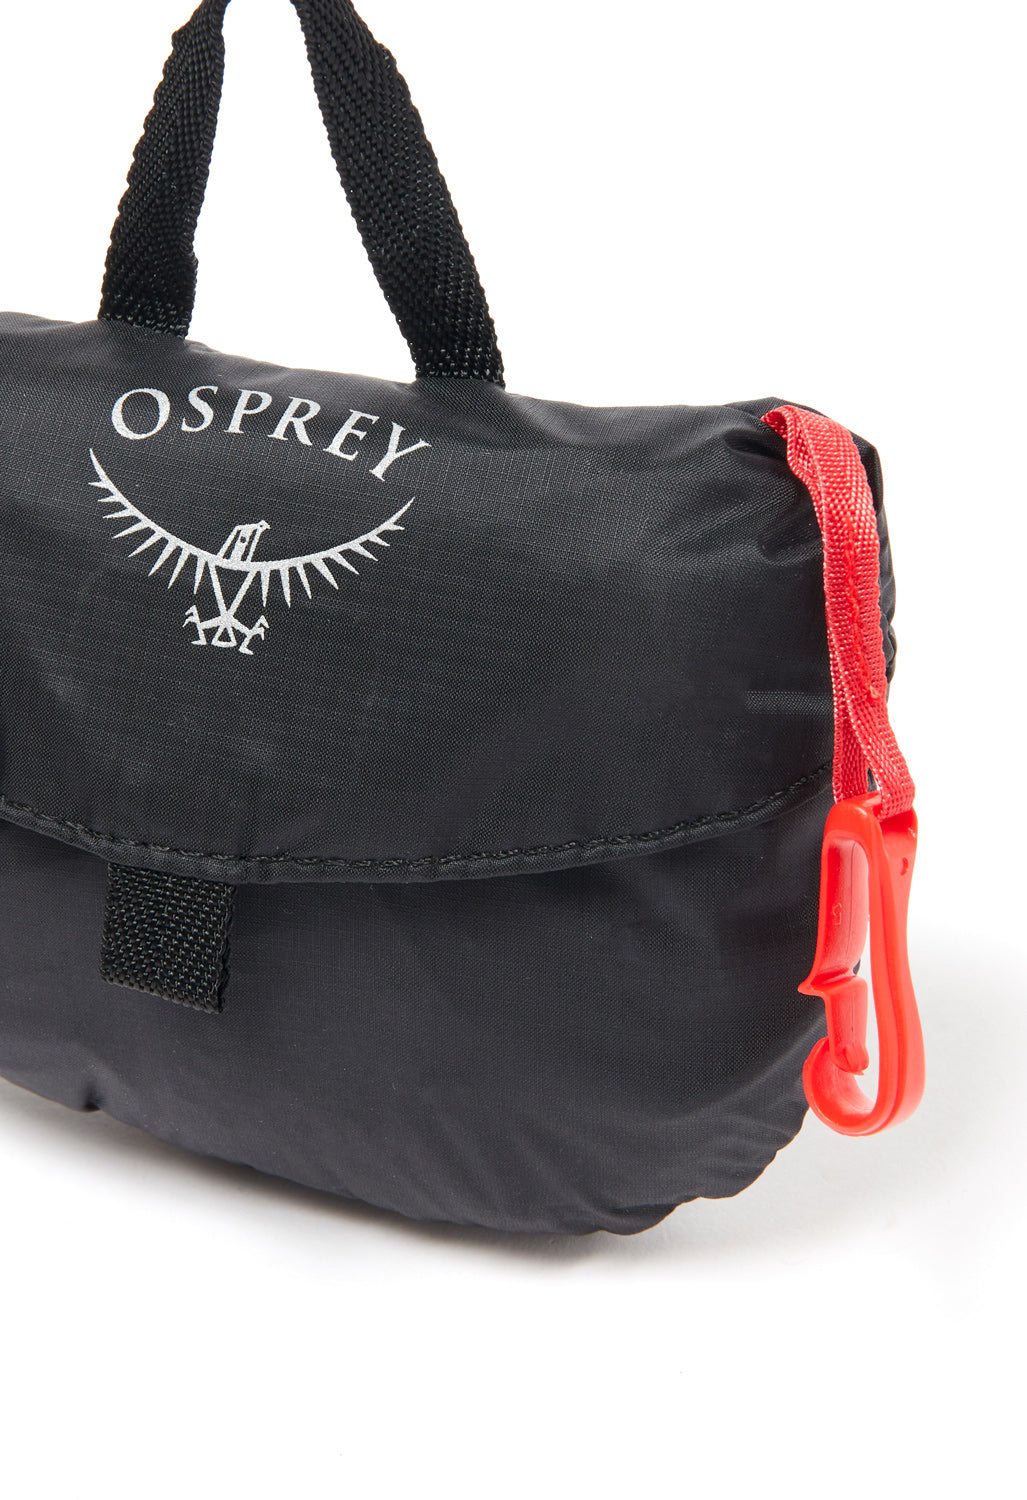 Osprey Ultralight Stuff Tote - Black